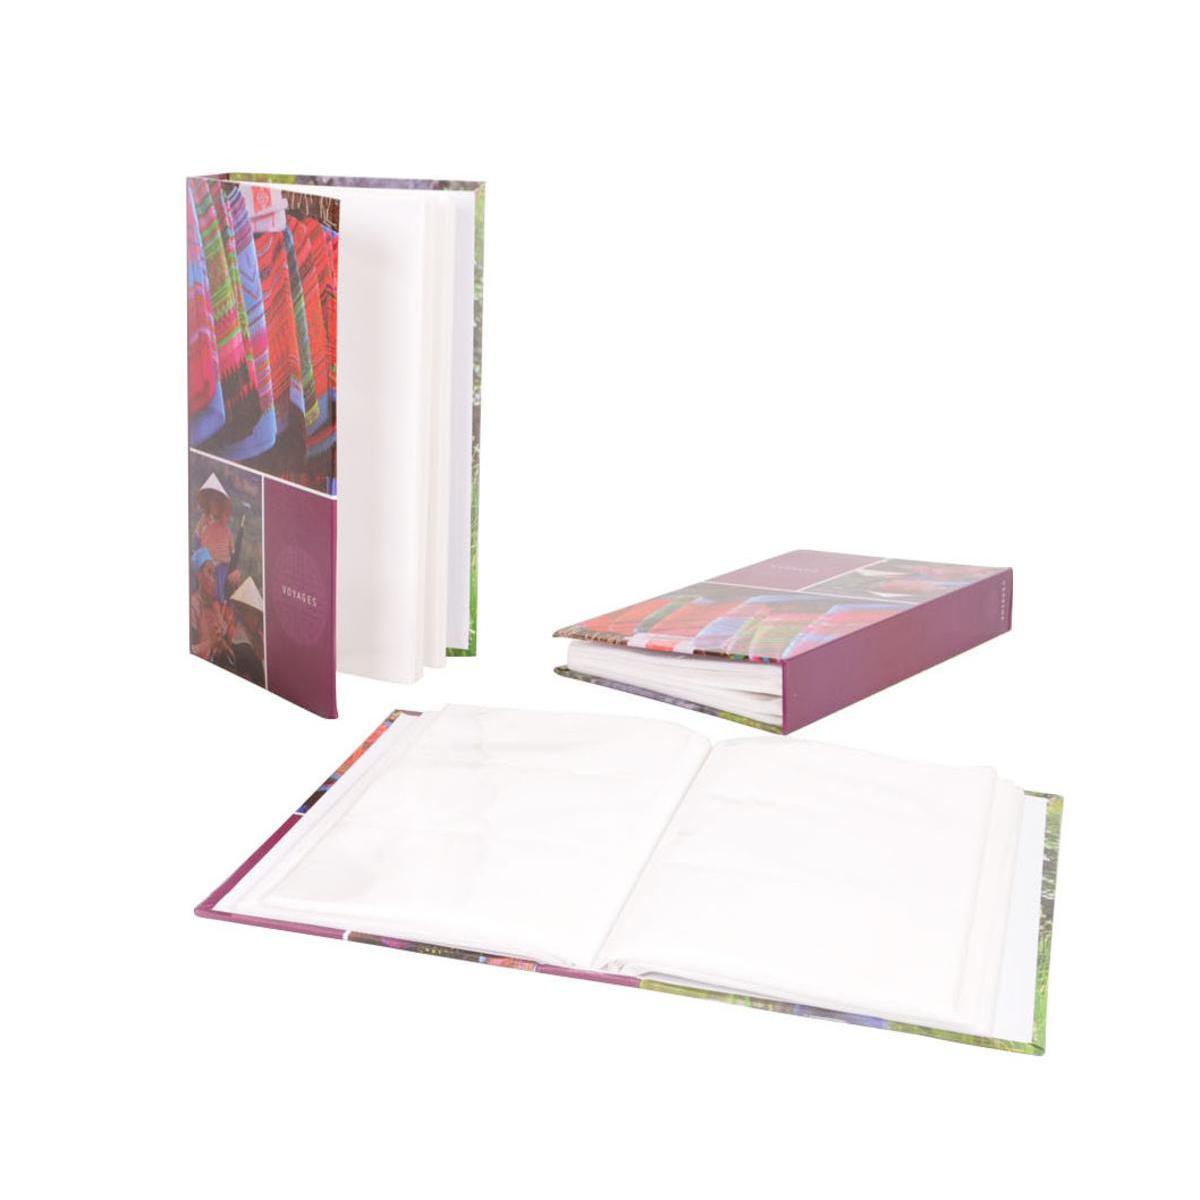 Album photos en PVC - 33,5 x 18,5 x 5 cm - Multicolore